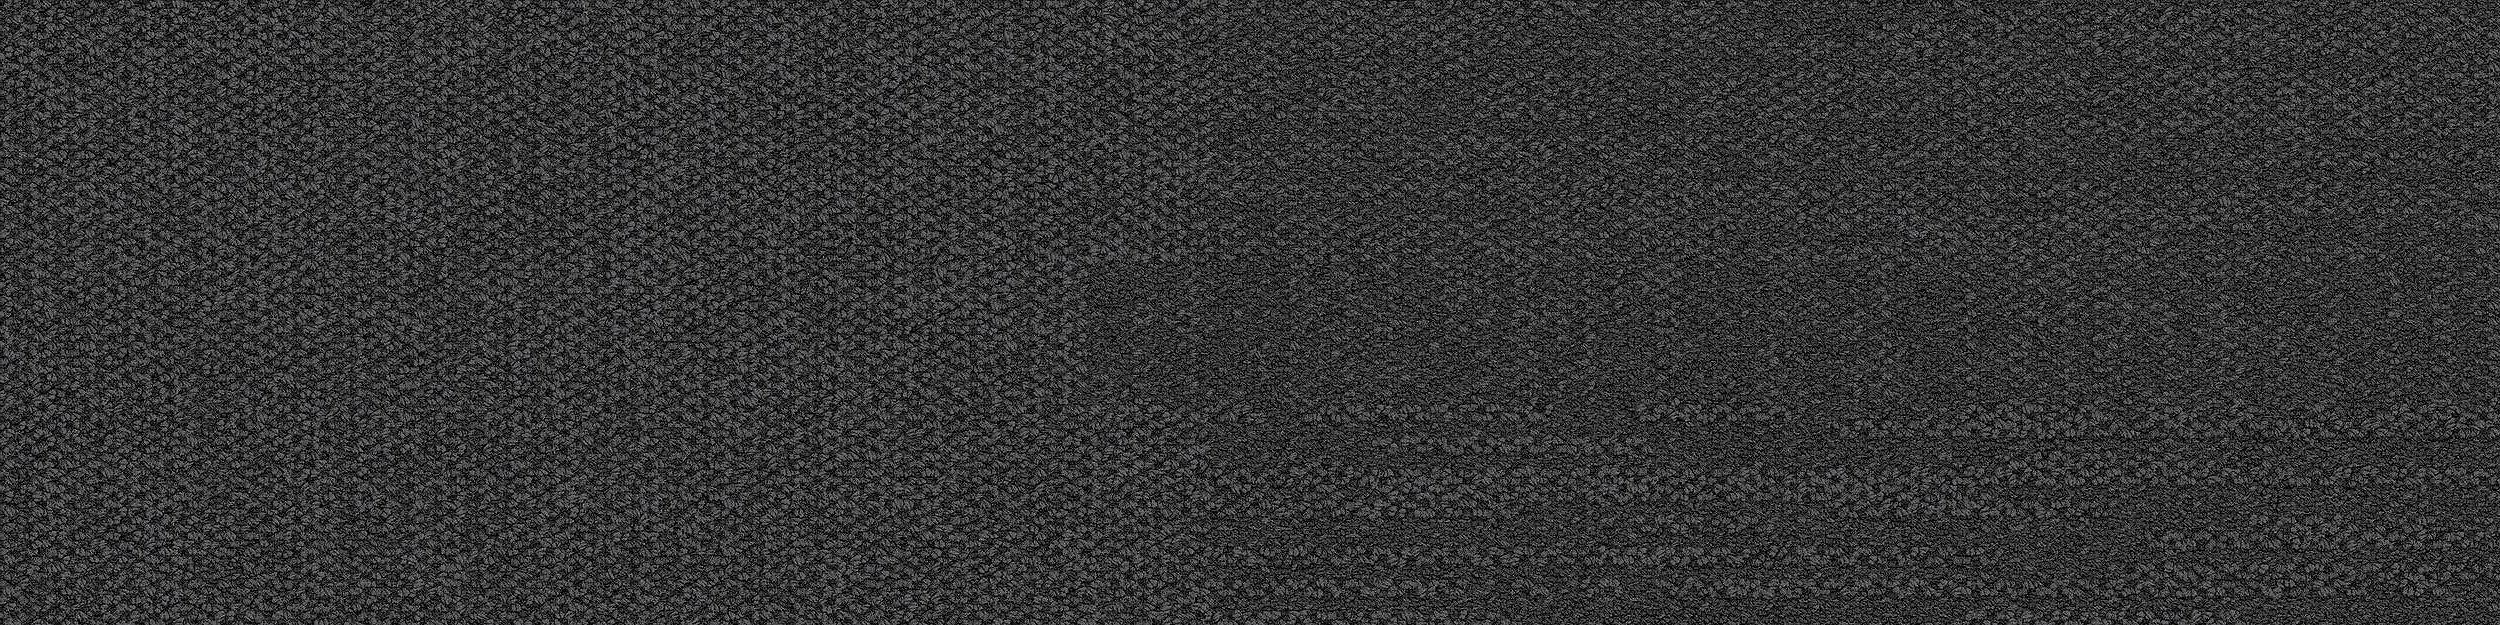 Verticals Carpet Tile In Zenith numéro d’image 12